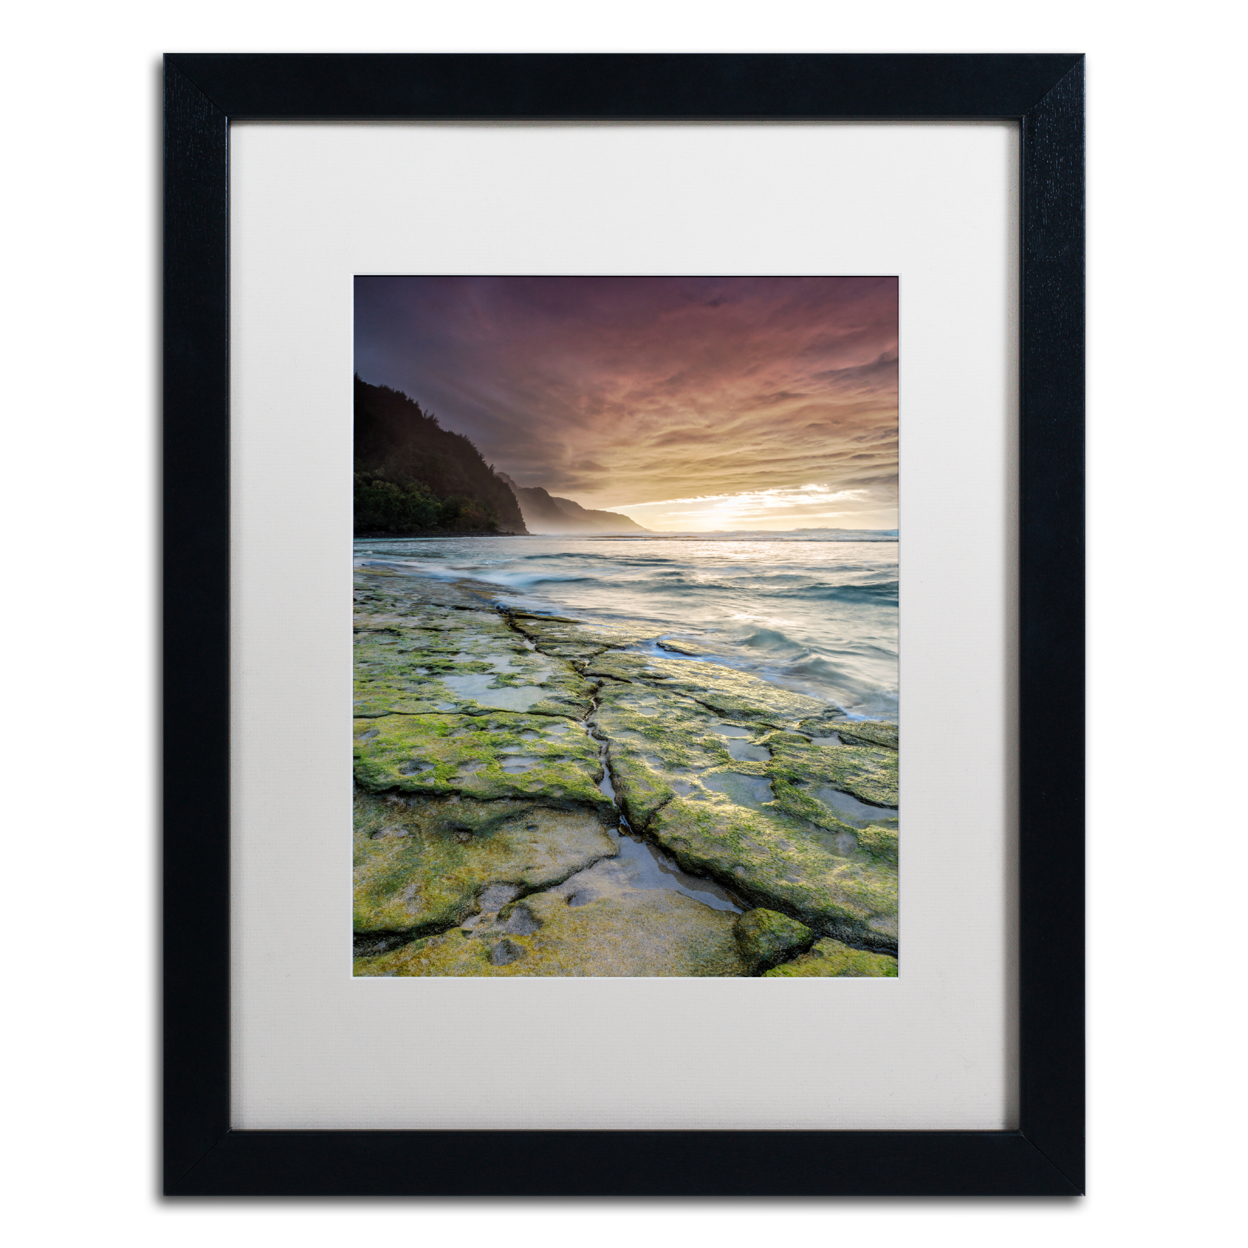 Pierre Leclerc 'Kee Beach Sunset' Black Wooden Framed Art 18 X 22 Inches